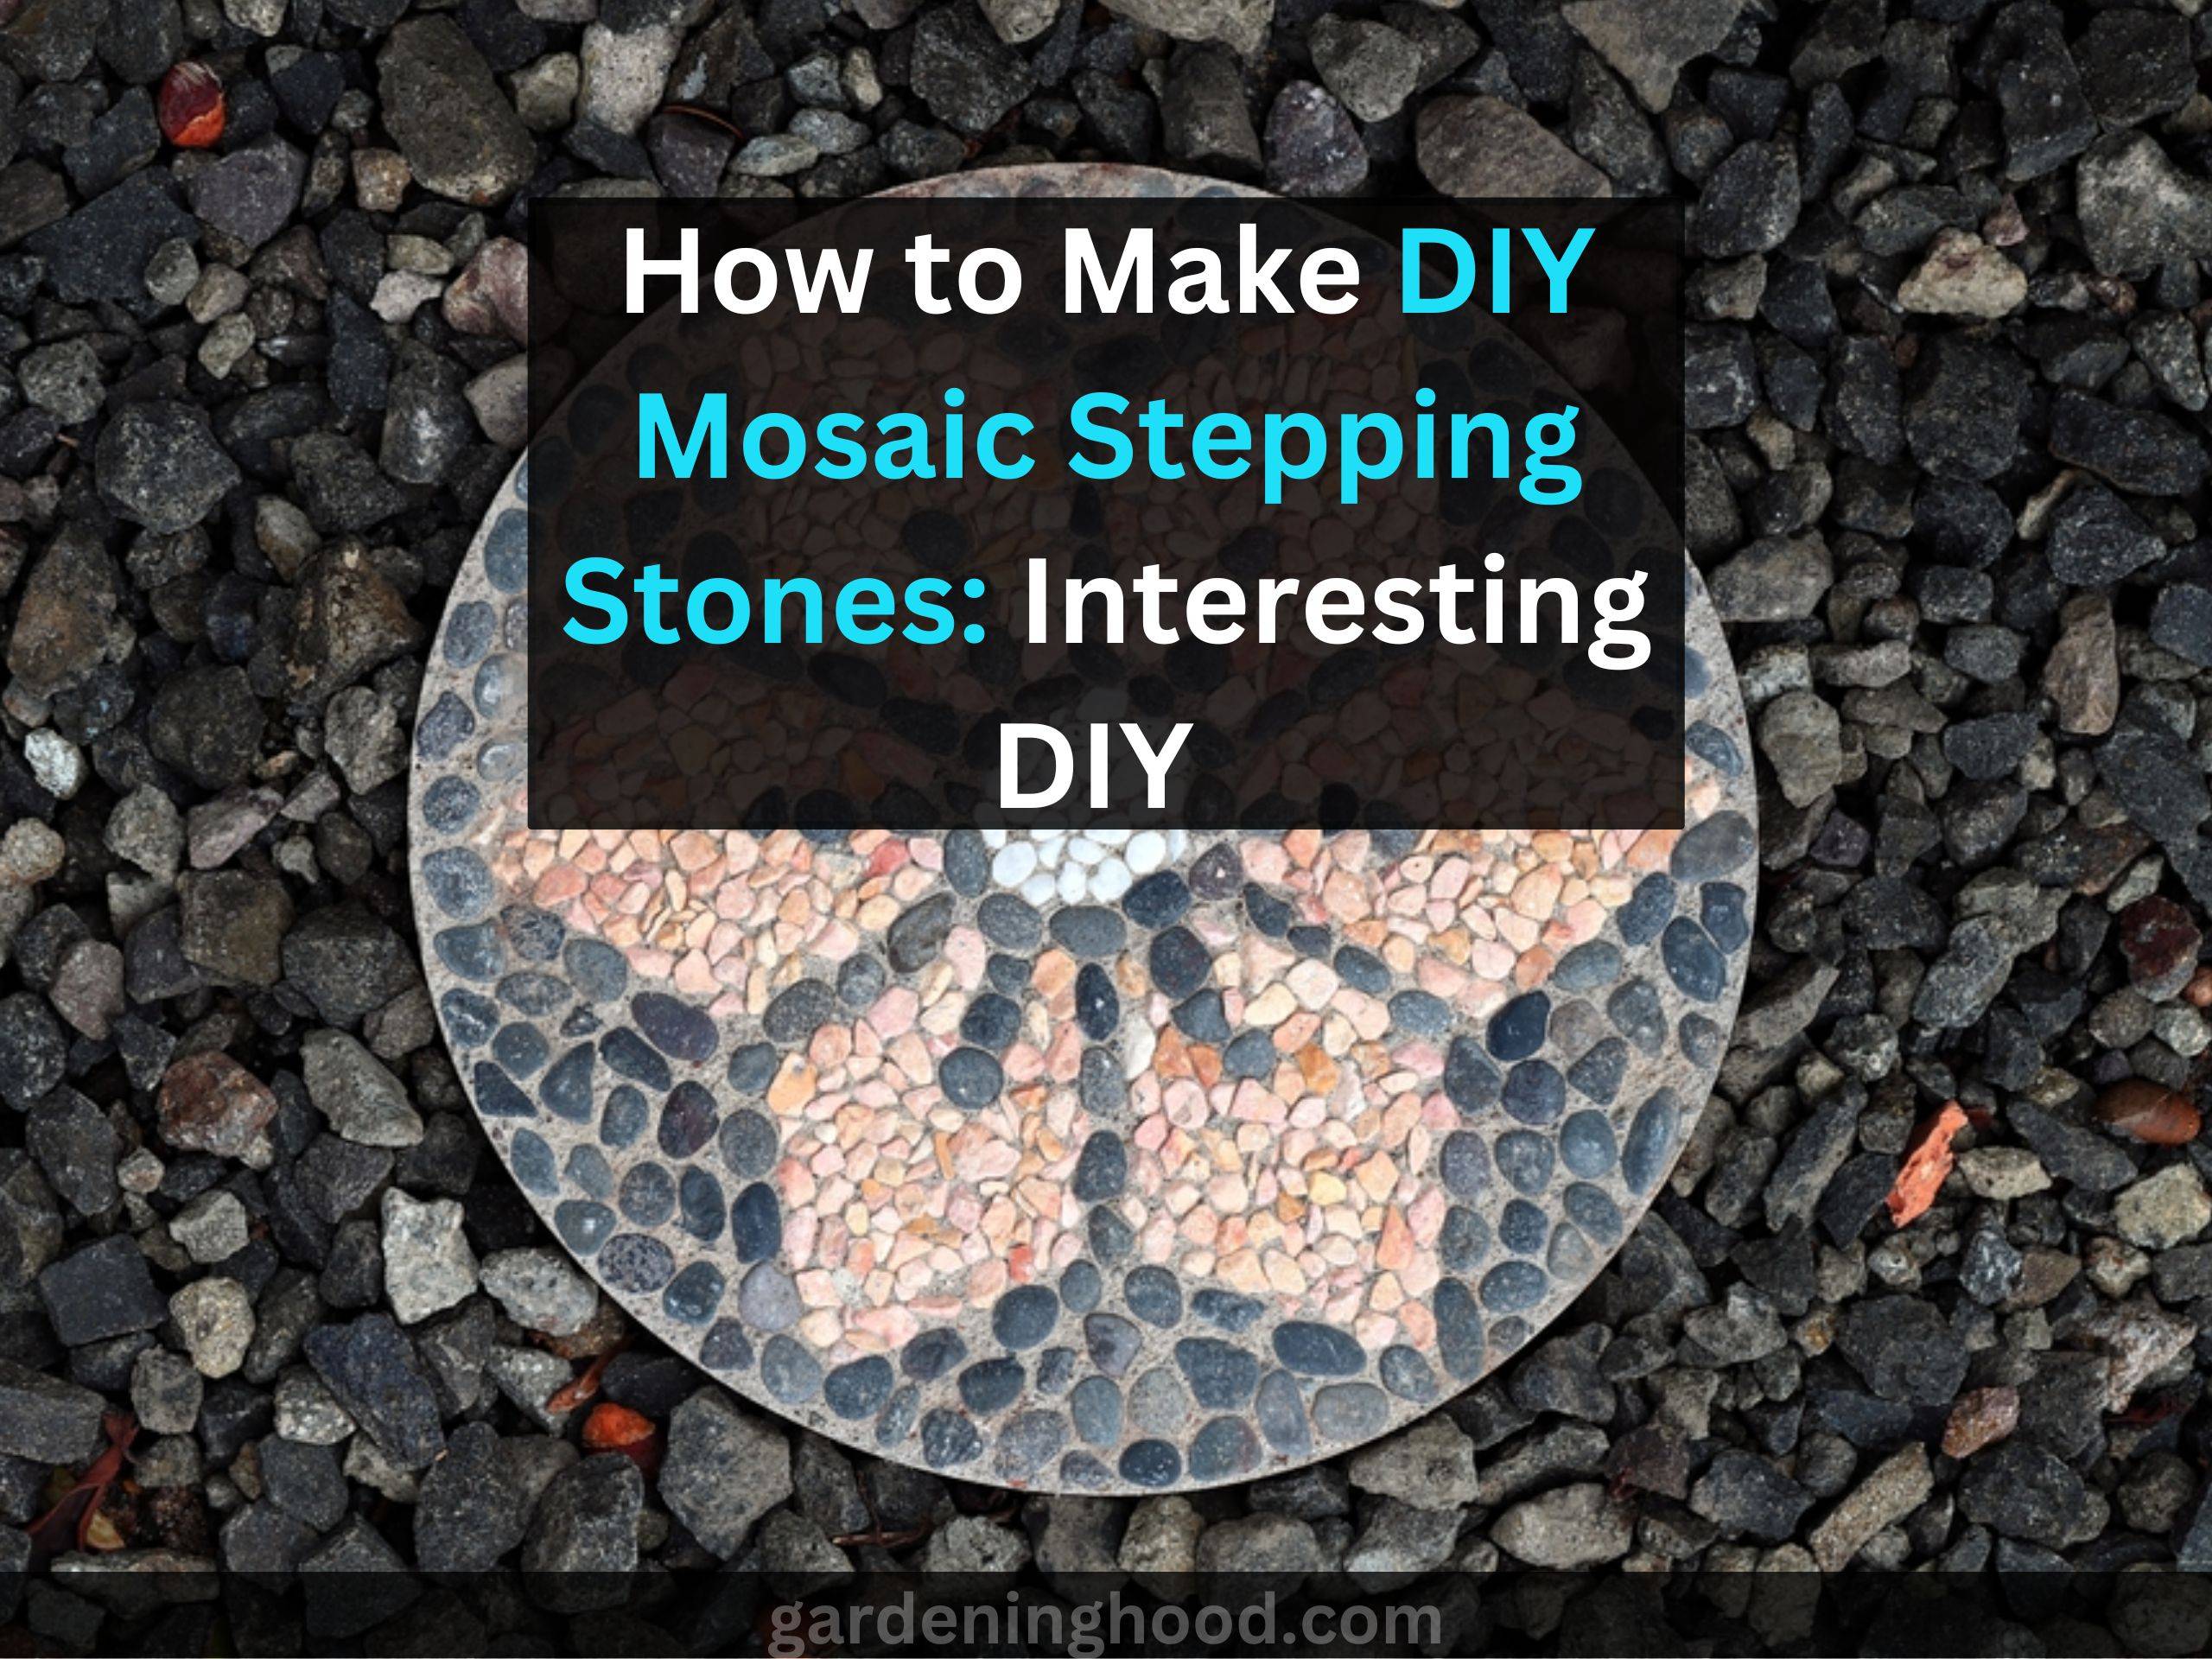 How to Make DIY Mosaic Stepping Stones: Interesting DIY